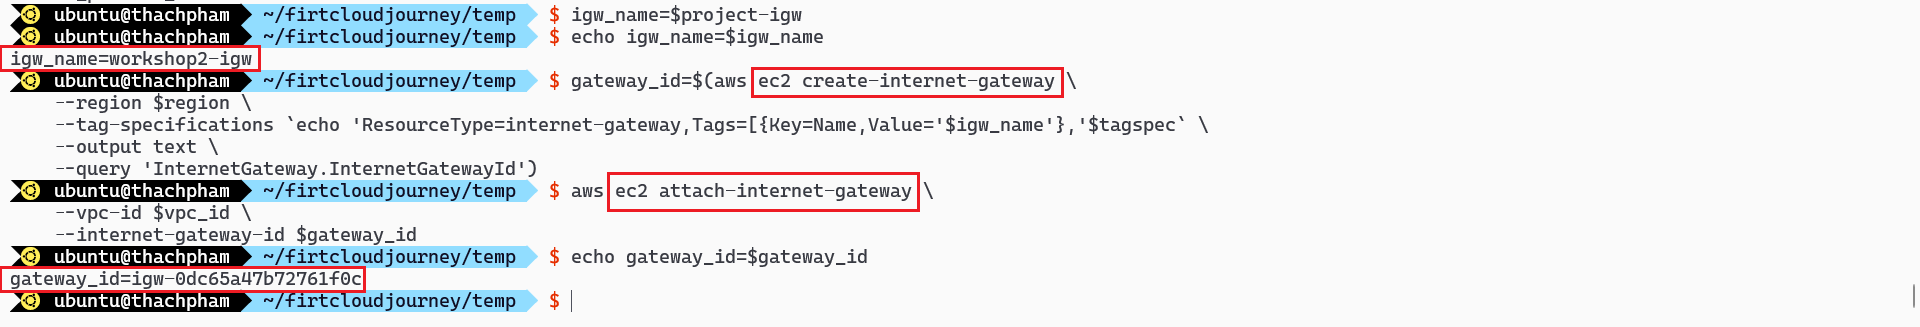 Create Internet Gateway